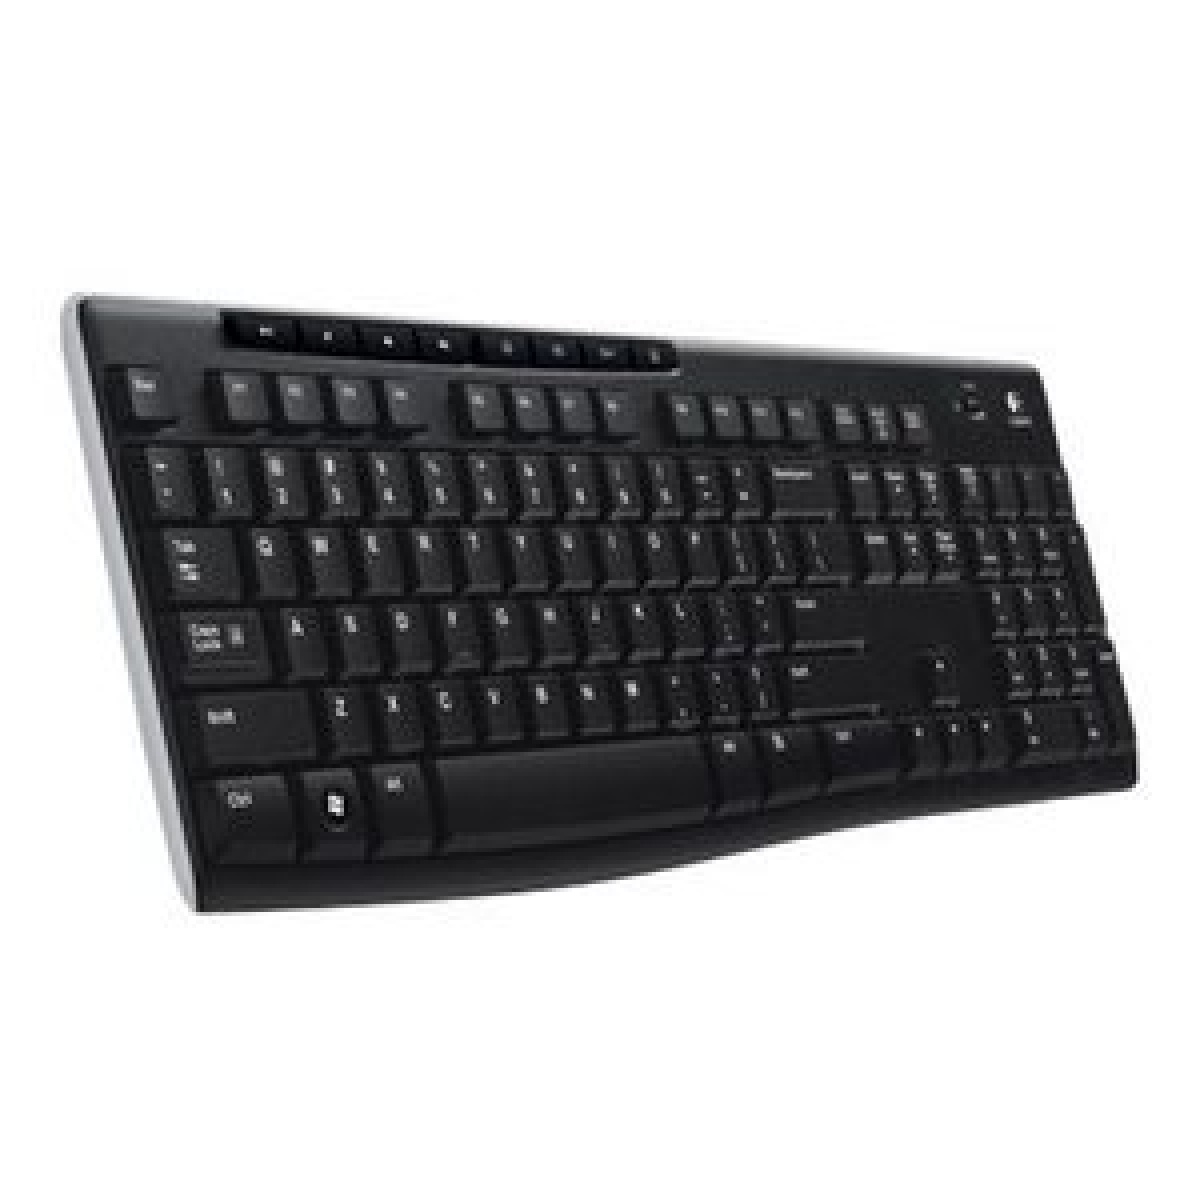 Tastatura WL K270 layout germana